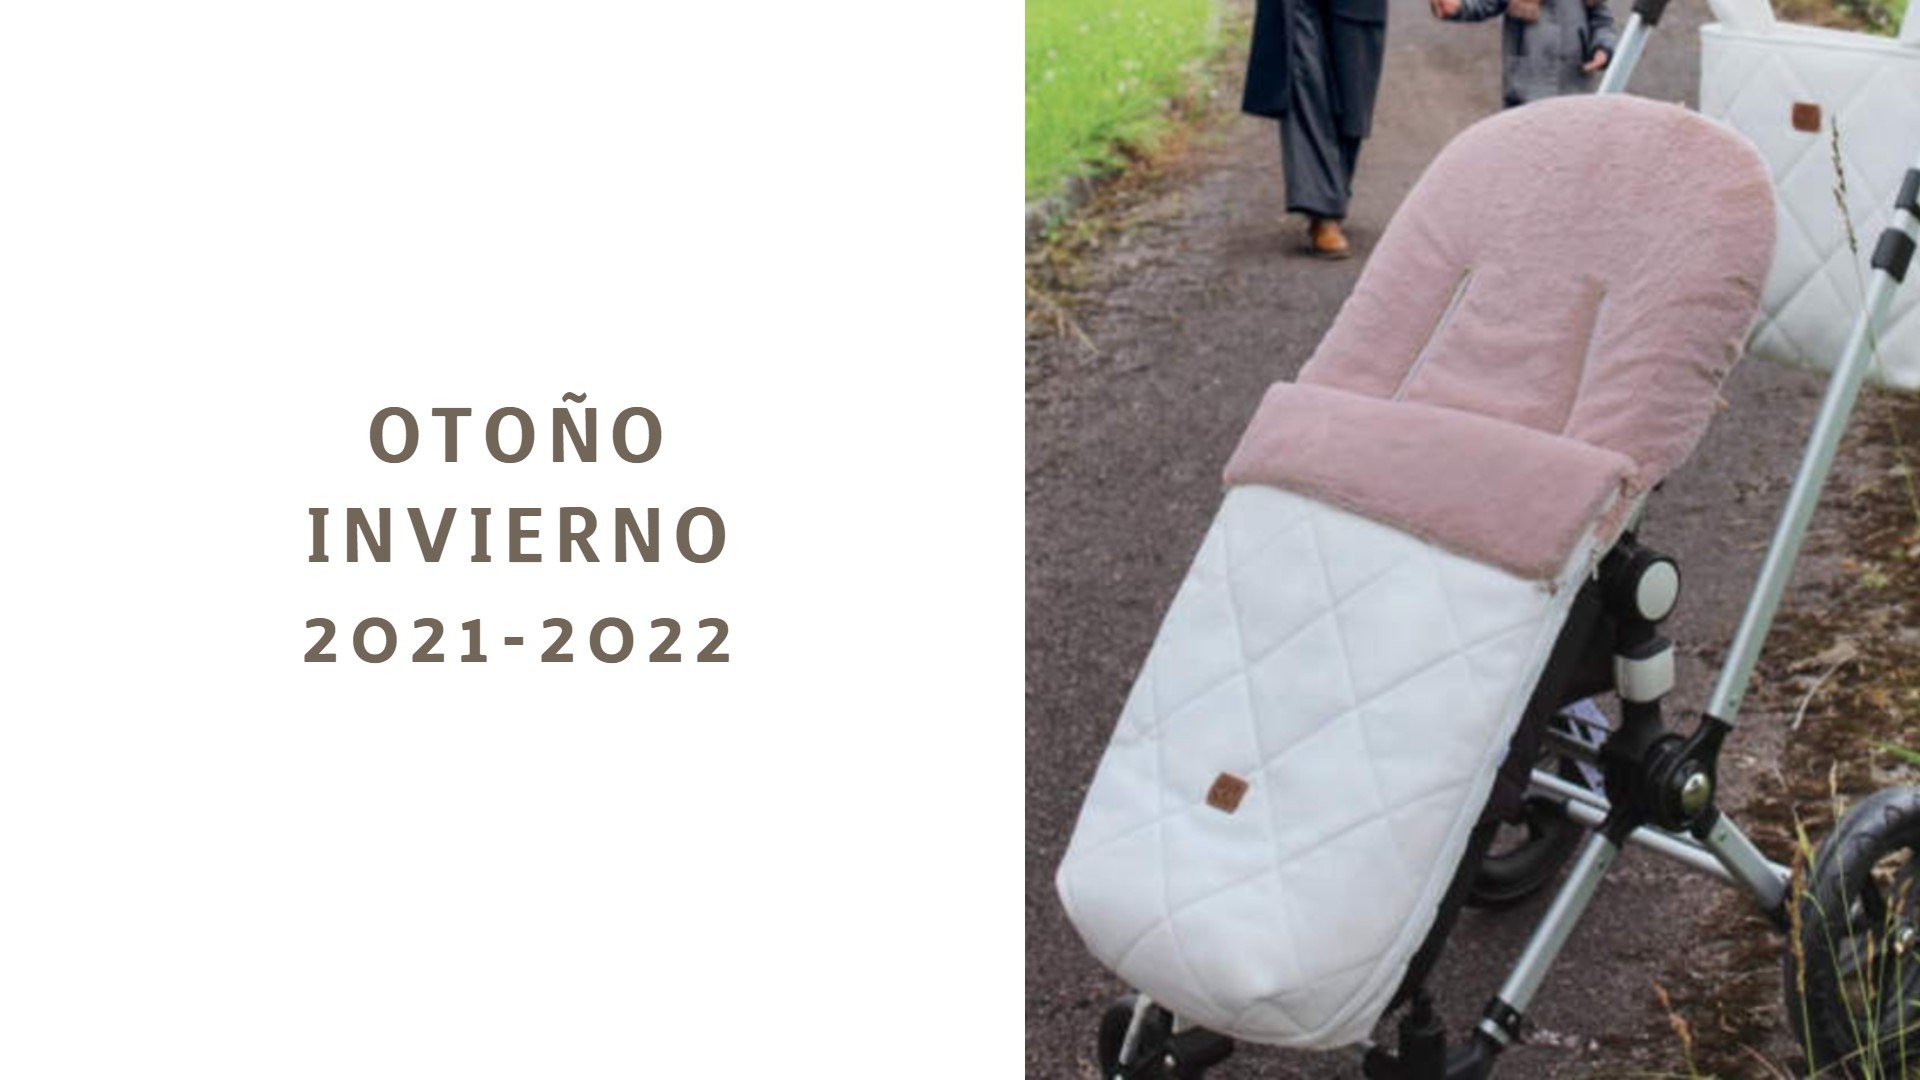 Nuevo Saco de silla Bugaboo, colección 2021-2022